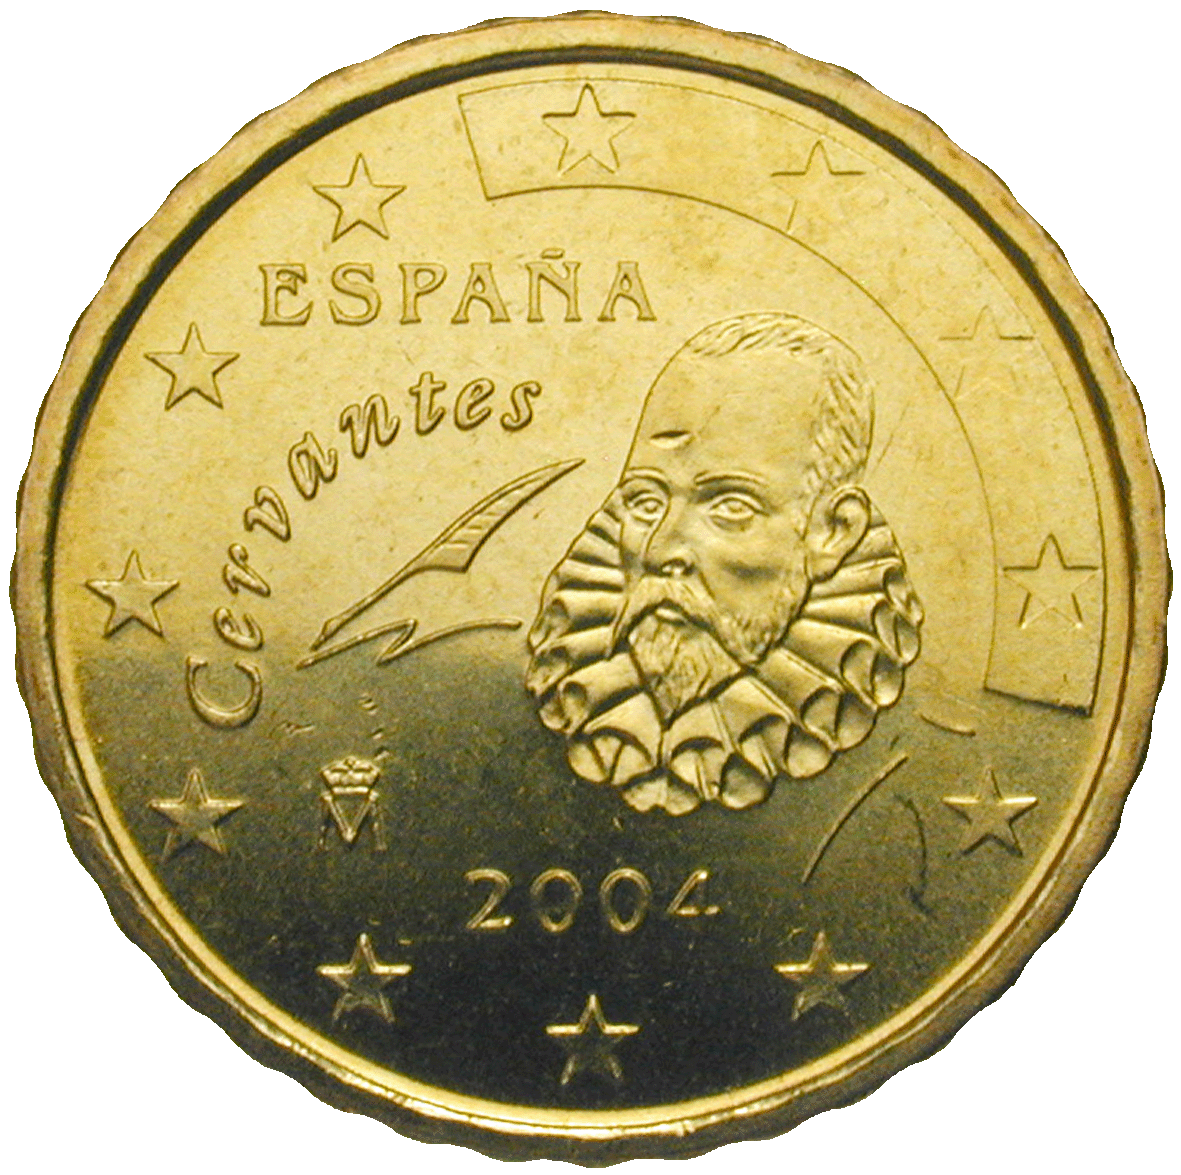 Kingdom of Spain, Juan Carlos, 10 Euro Cent 2004 (obverse)